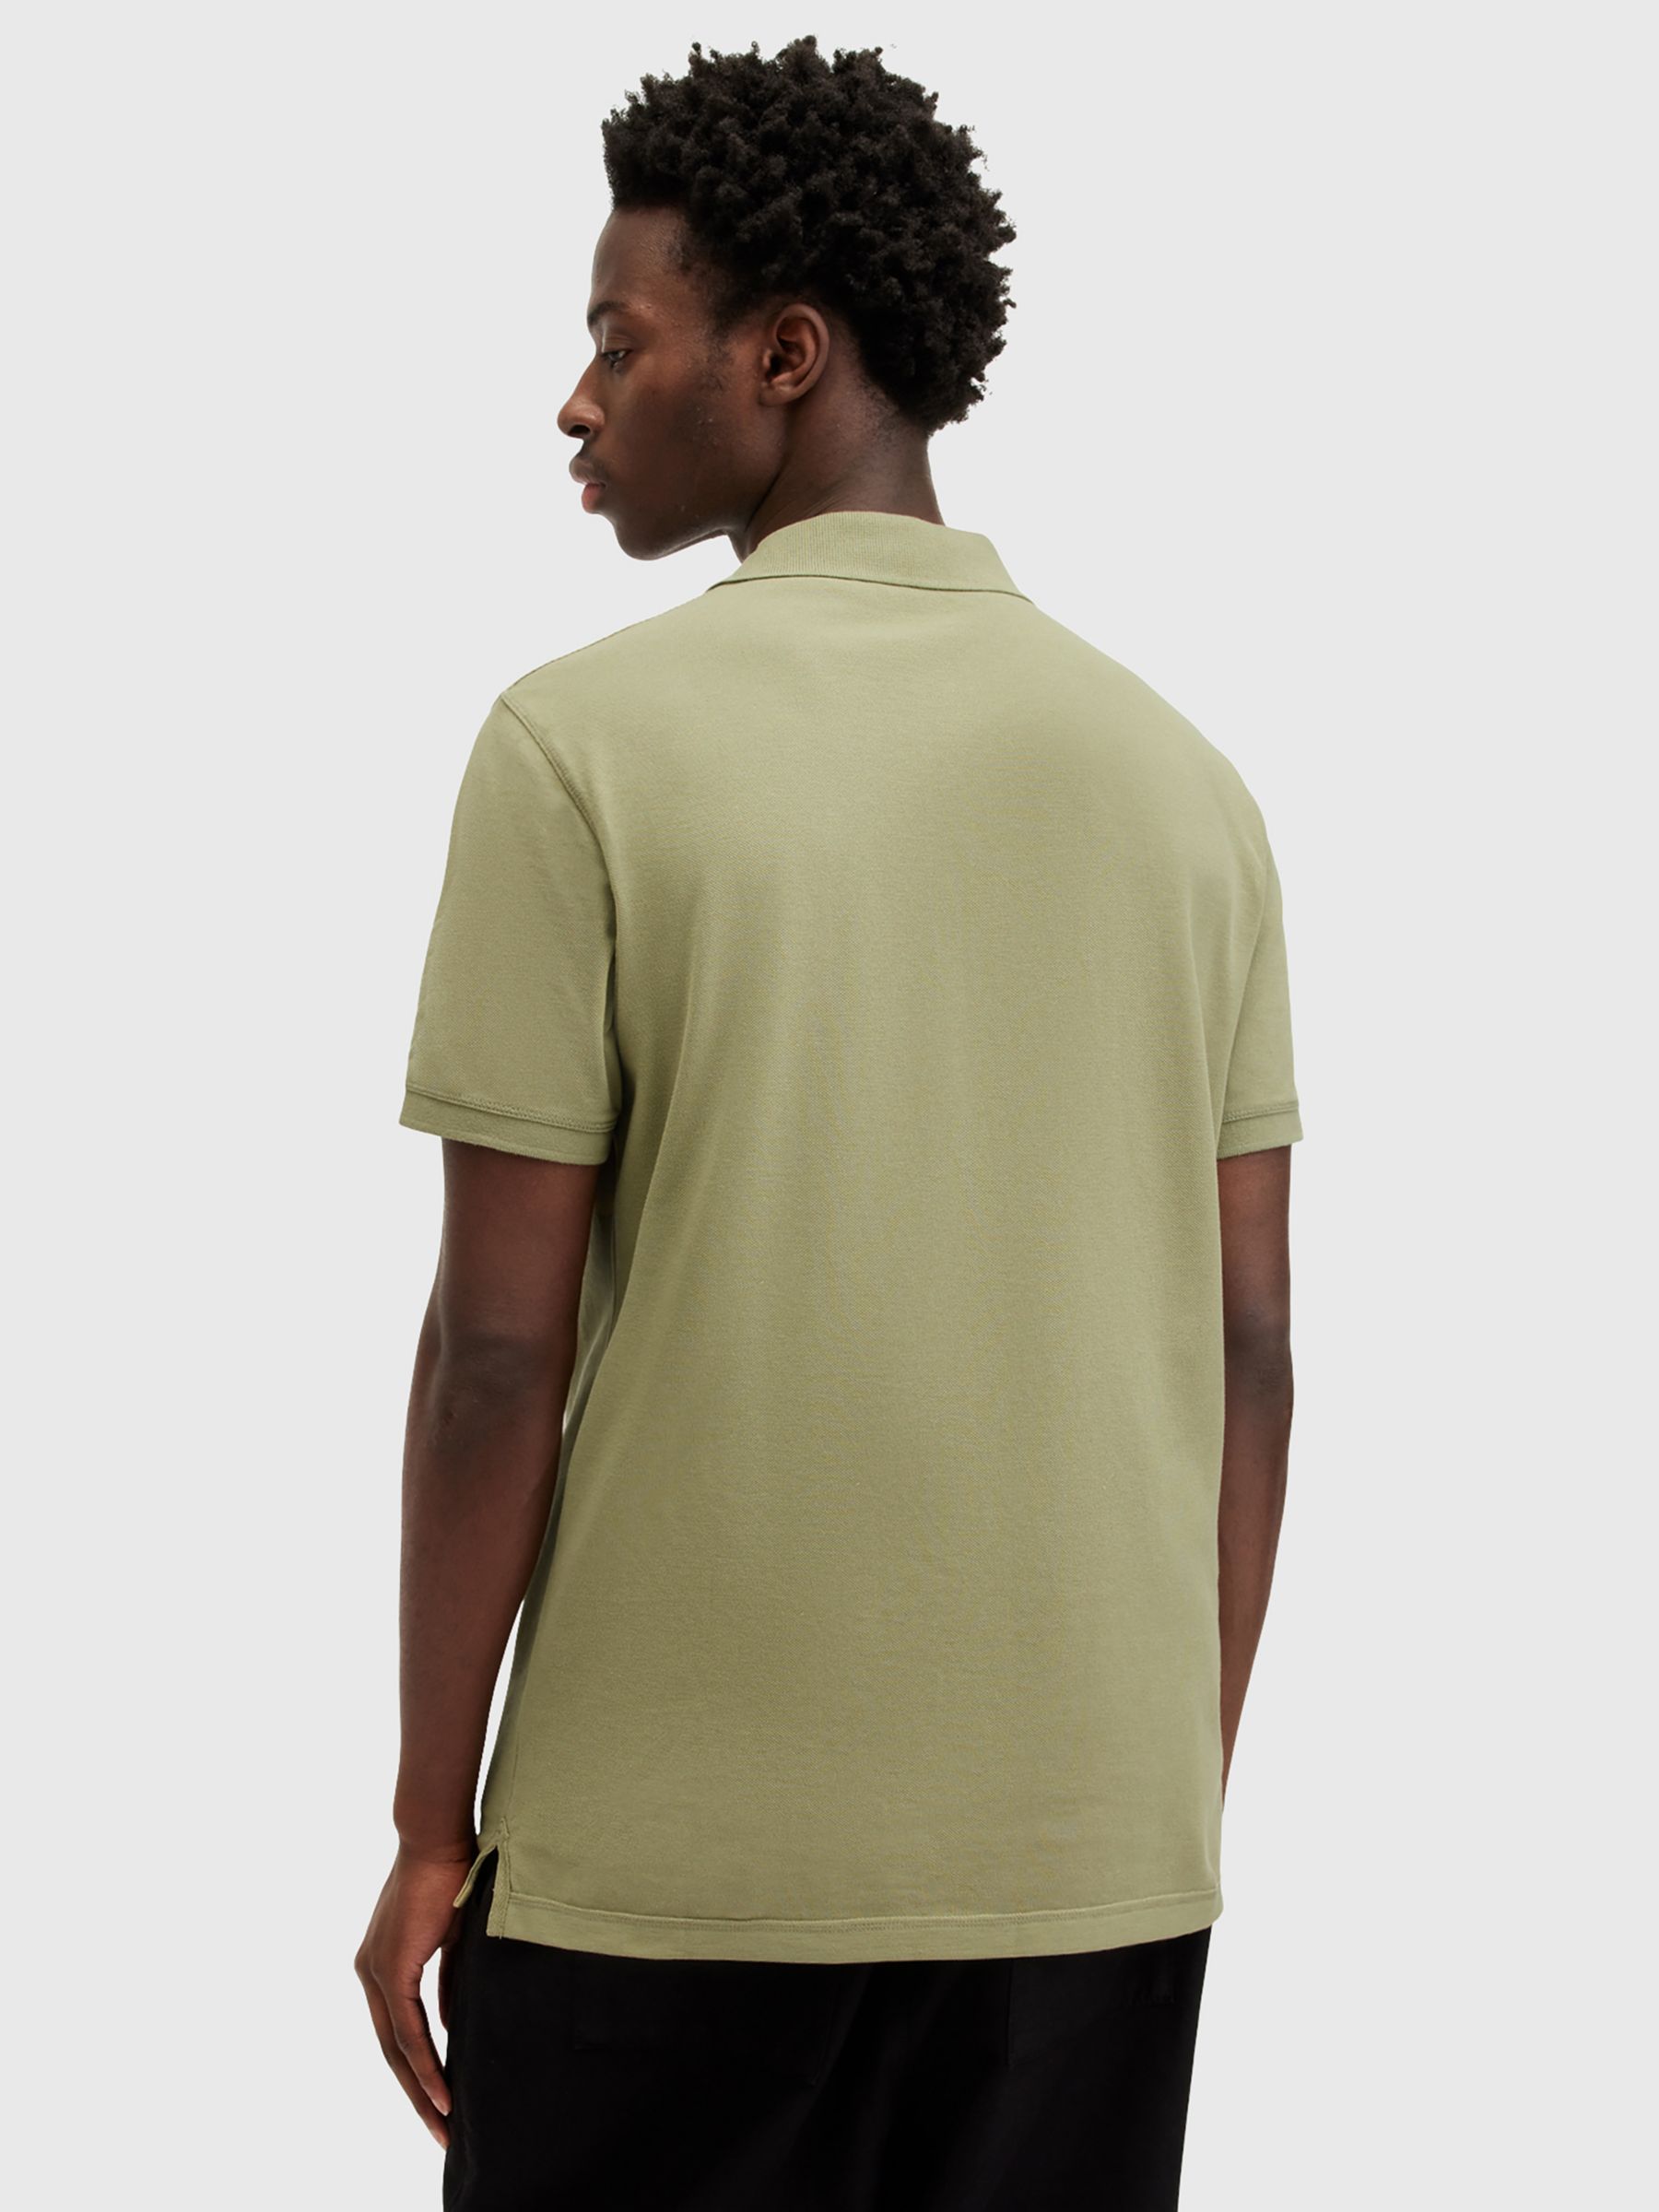 AllSaints Reform Short Sleeve Polo Shirt, Pack of 2, Green/White, XS